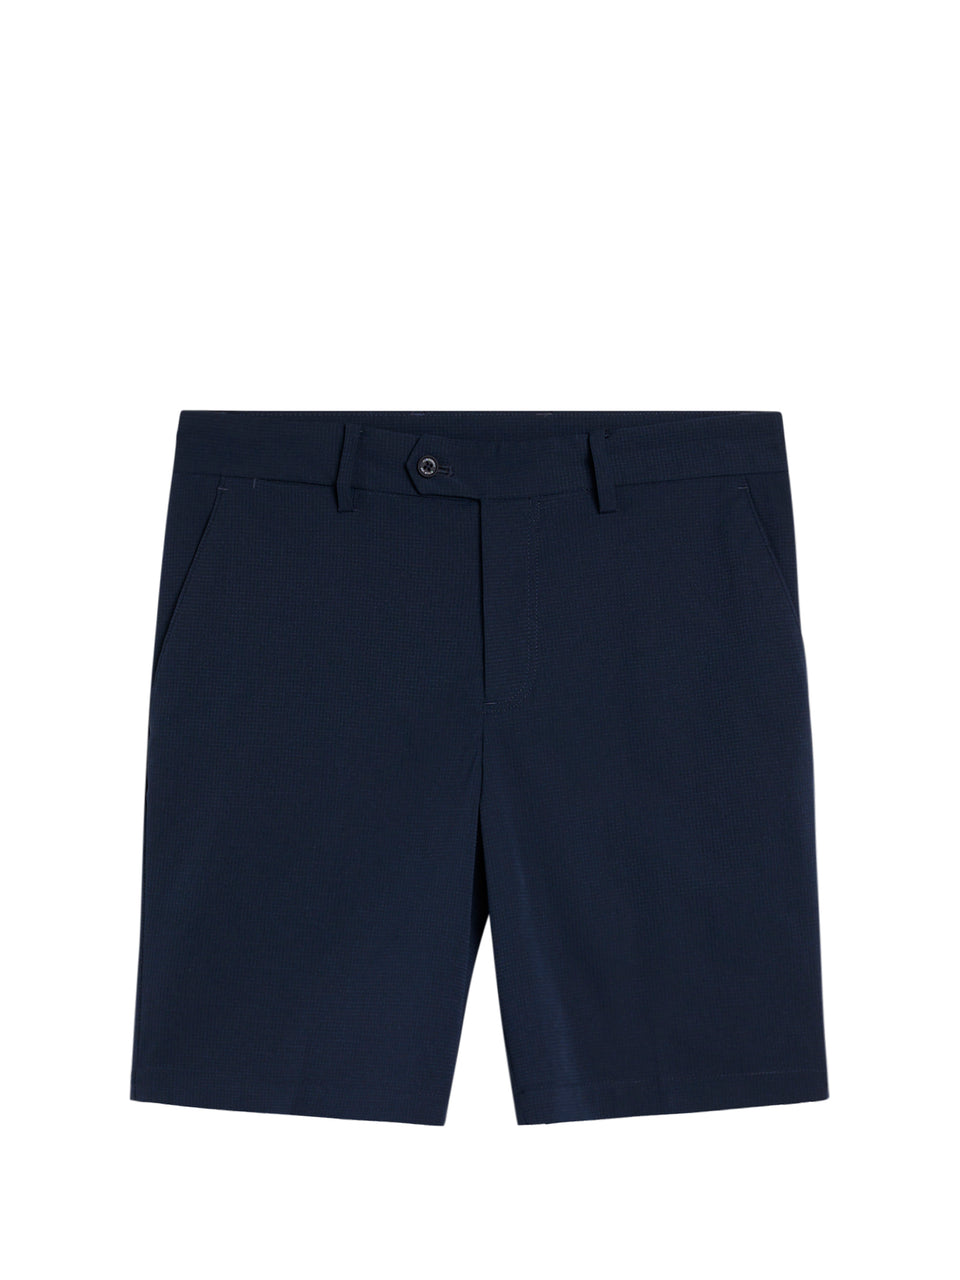 Vent Shorts / JL Navy